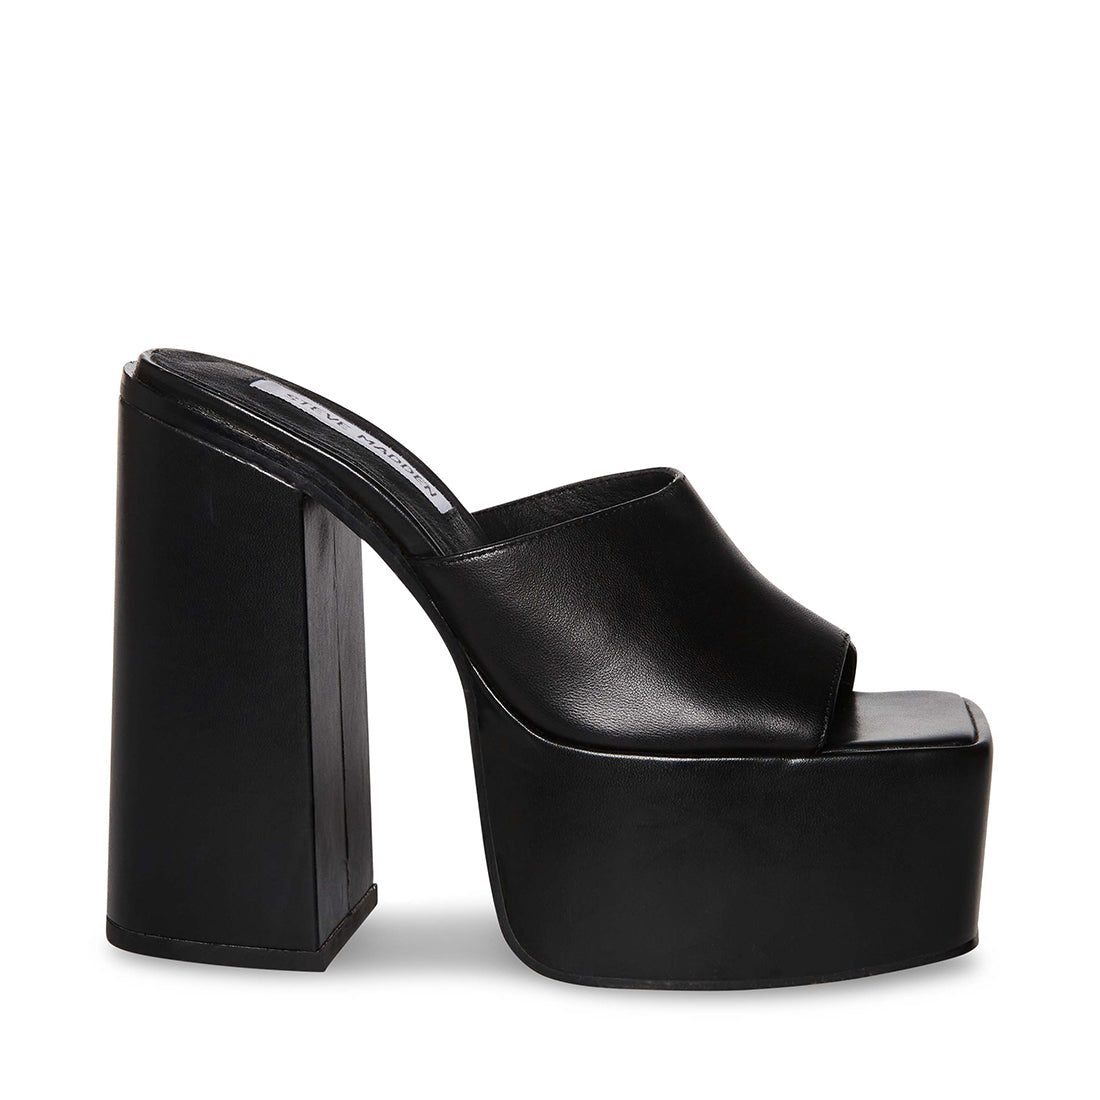 Trixie Sandal Black Leather